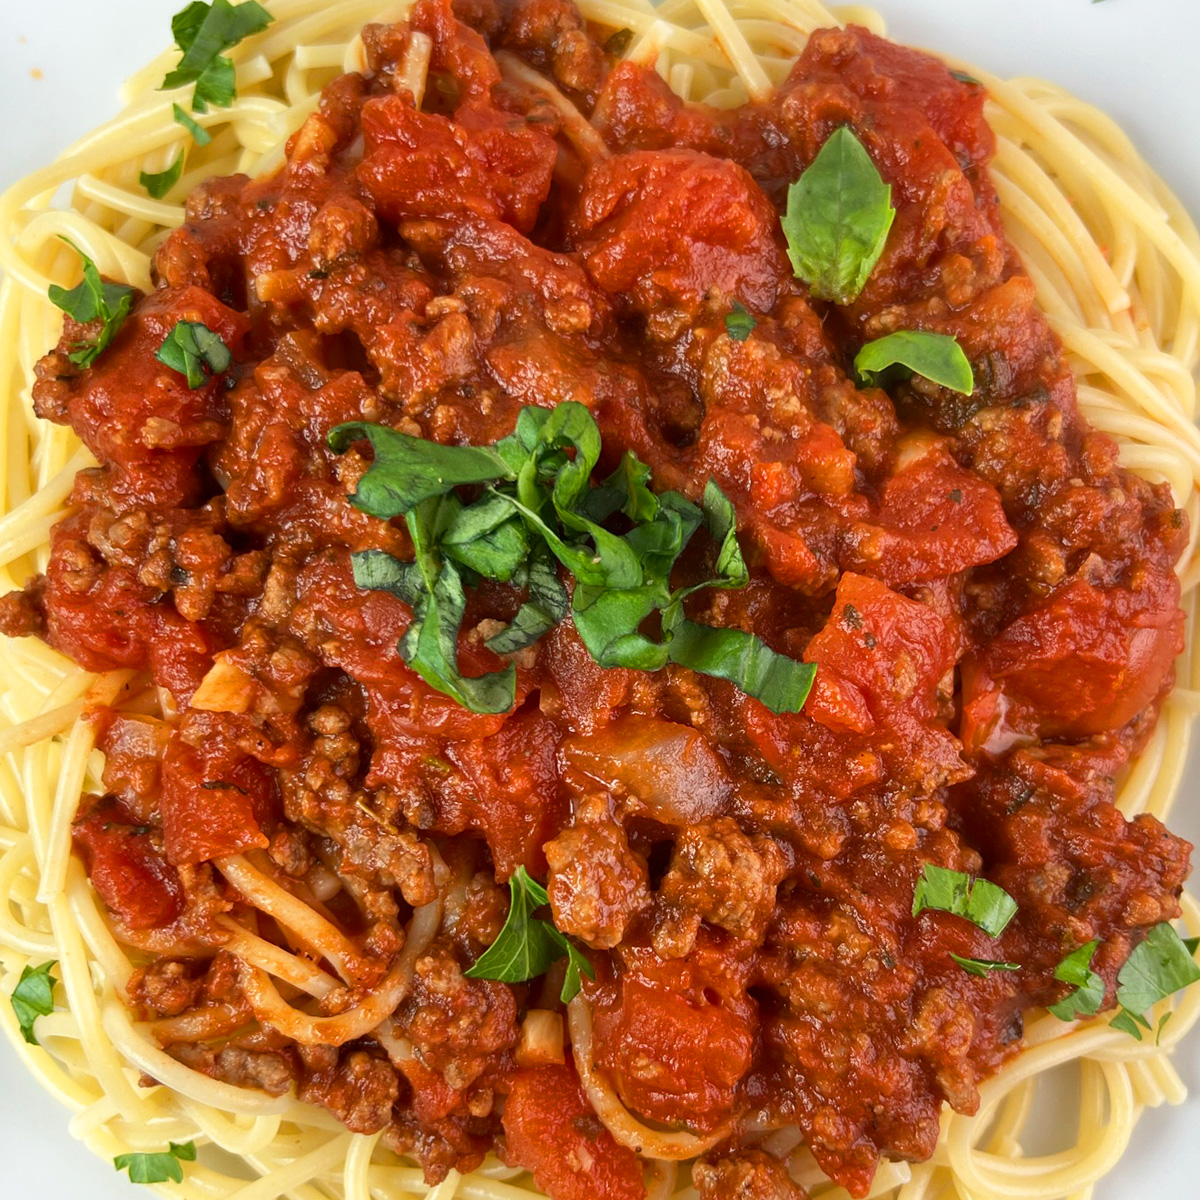 https://easylowsodiumrecipes.com/wp-content/uploads/2015/10/low-sodium-spaghetti-sauce-feature.jpg